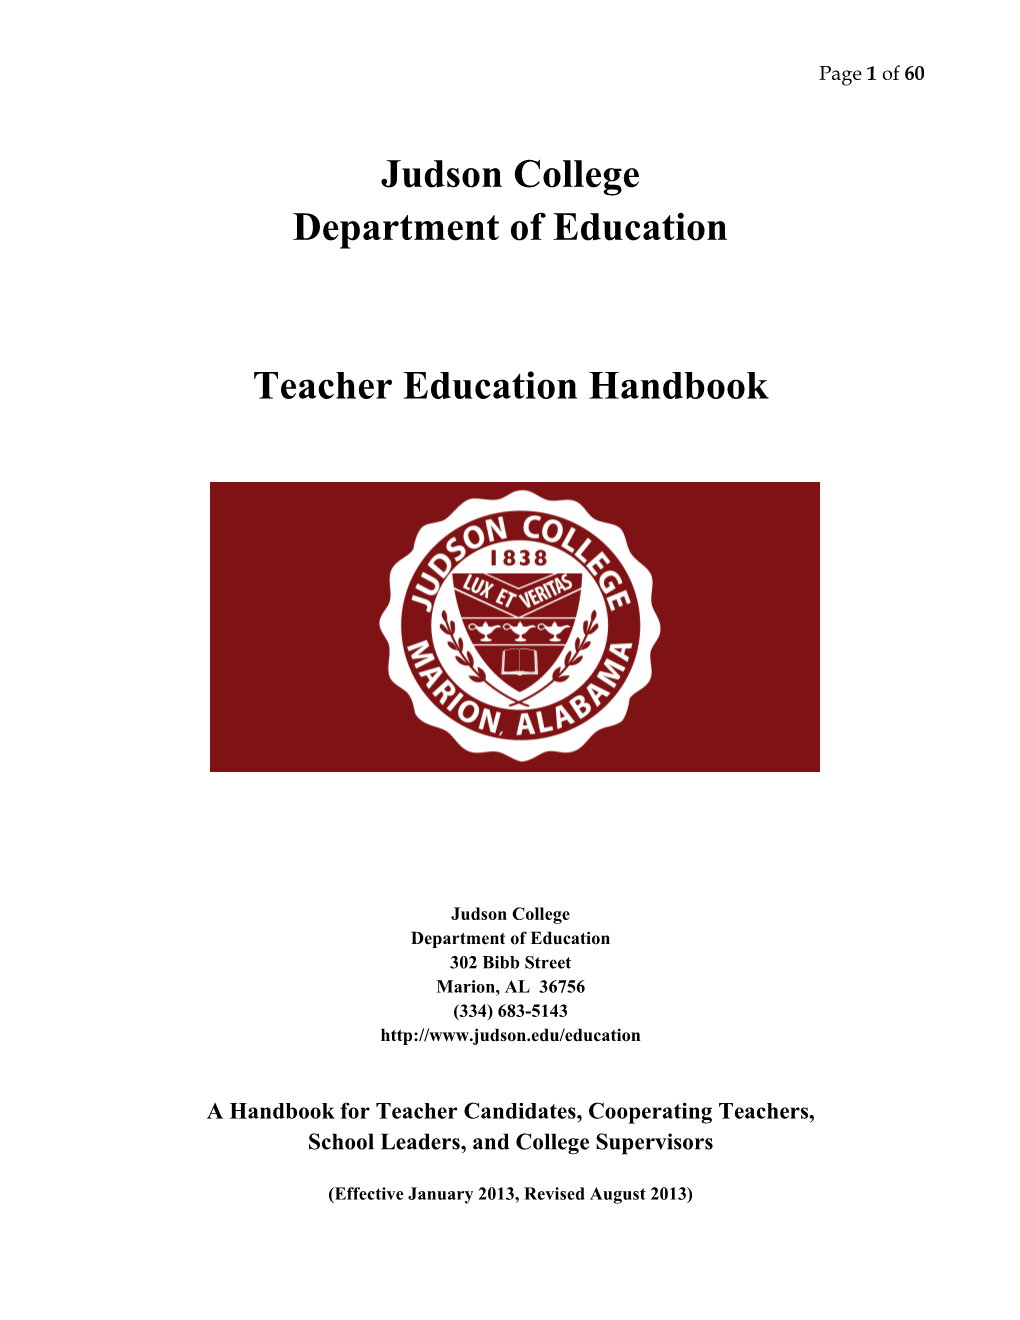 Judson College Department of Education Teacher Education Handbook